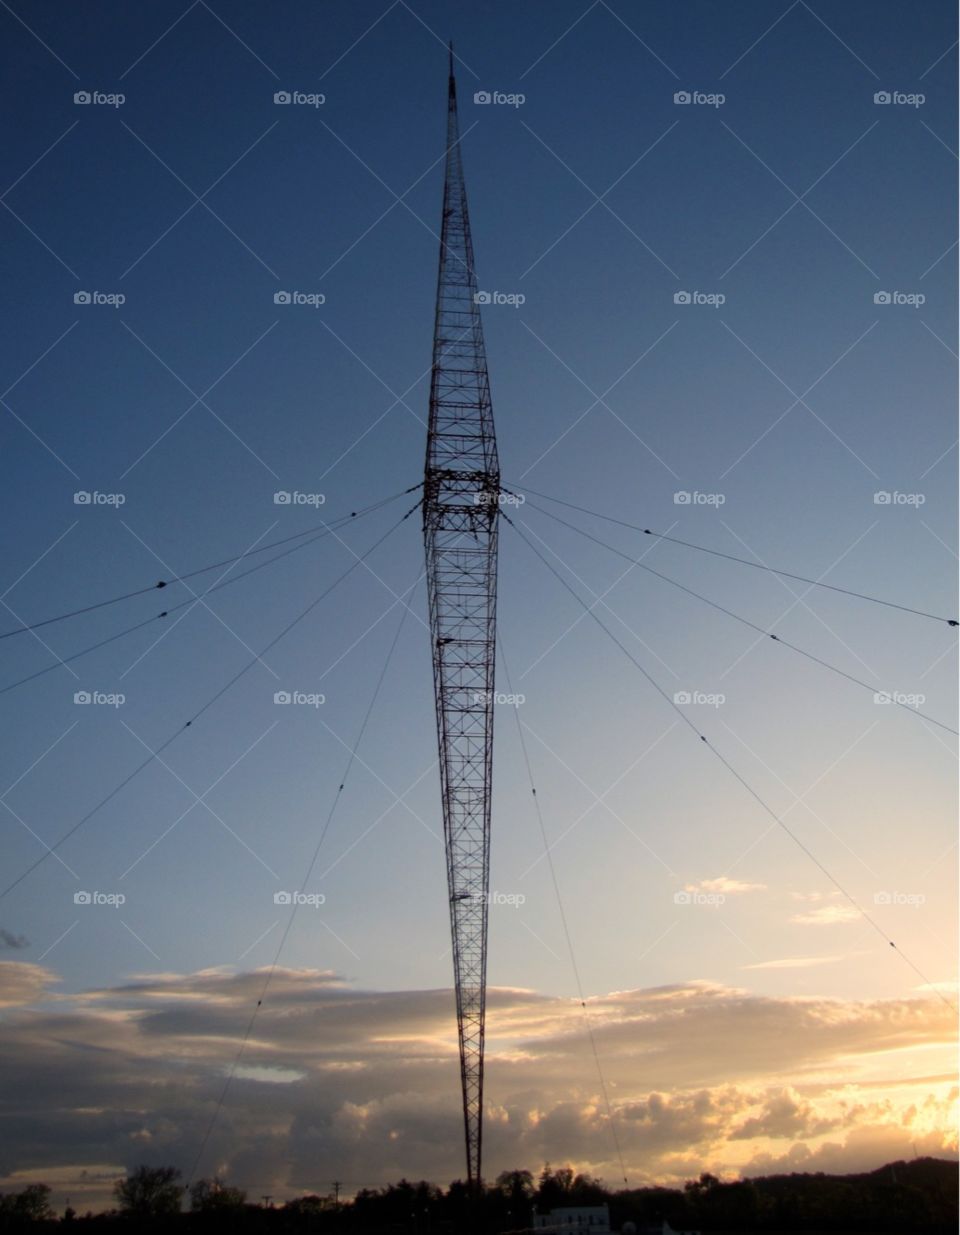 WSM radio tower Nashville, Tennessee